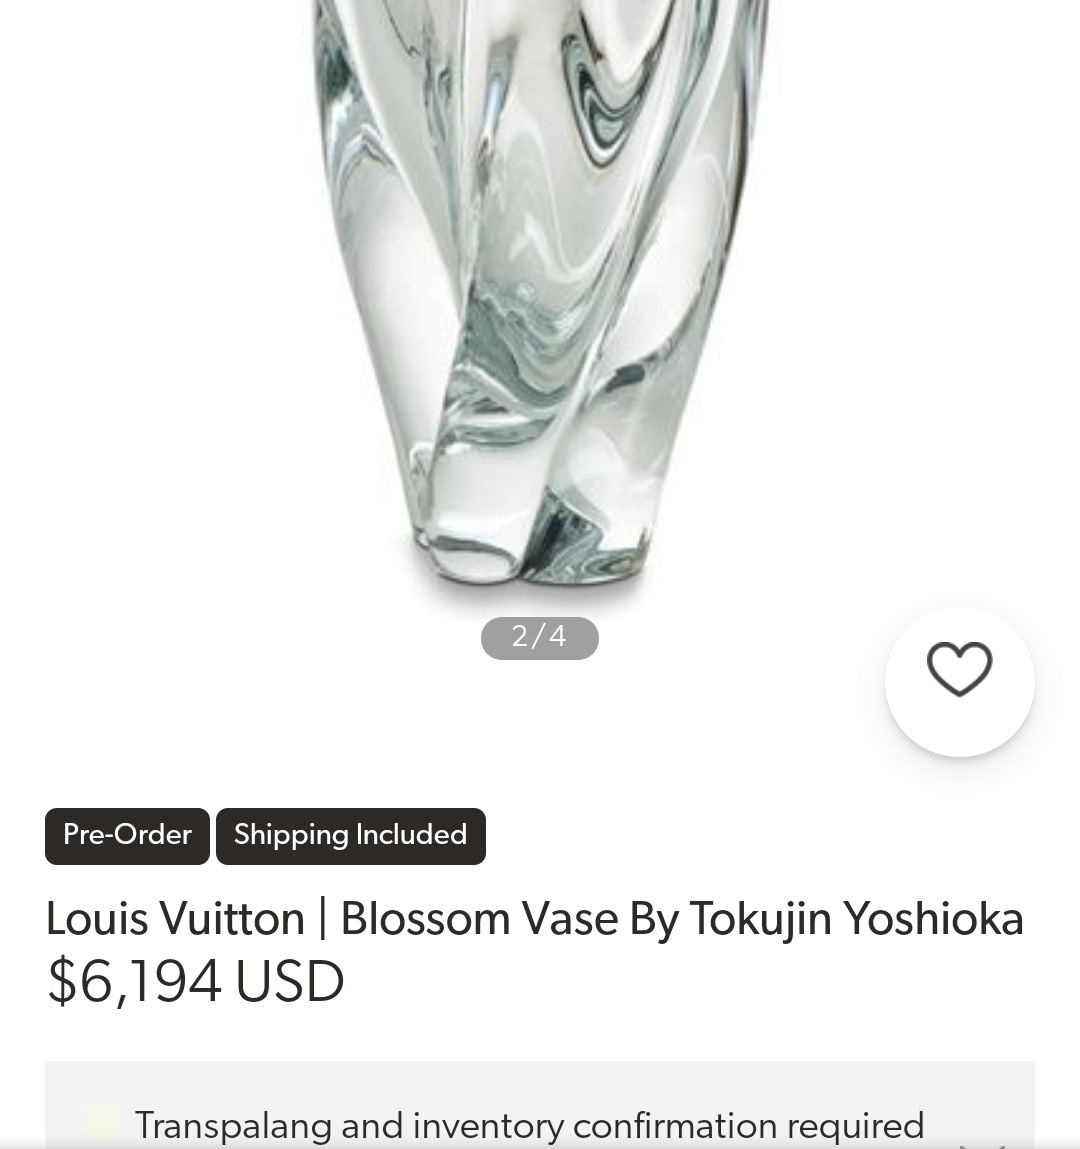 tokujin yoshioka sculpts louis vuitton monogram into 'blossom vase